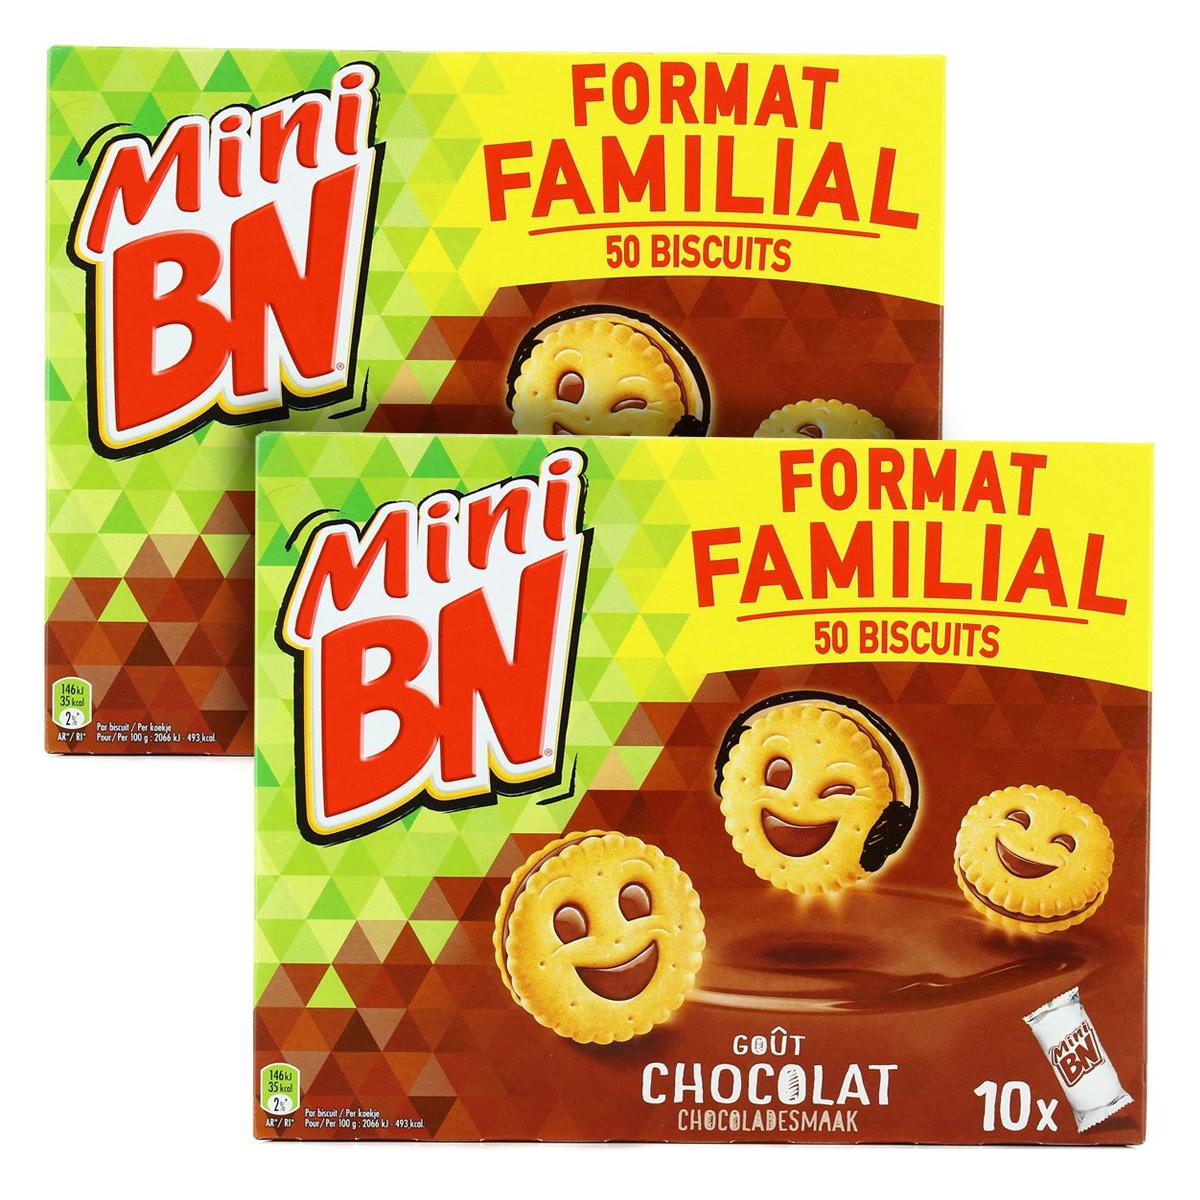 Achat / Vente Promotion BN Mini choco goût chocolat, Lot de 2x350g